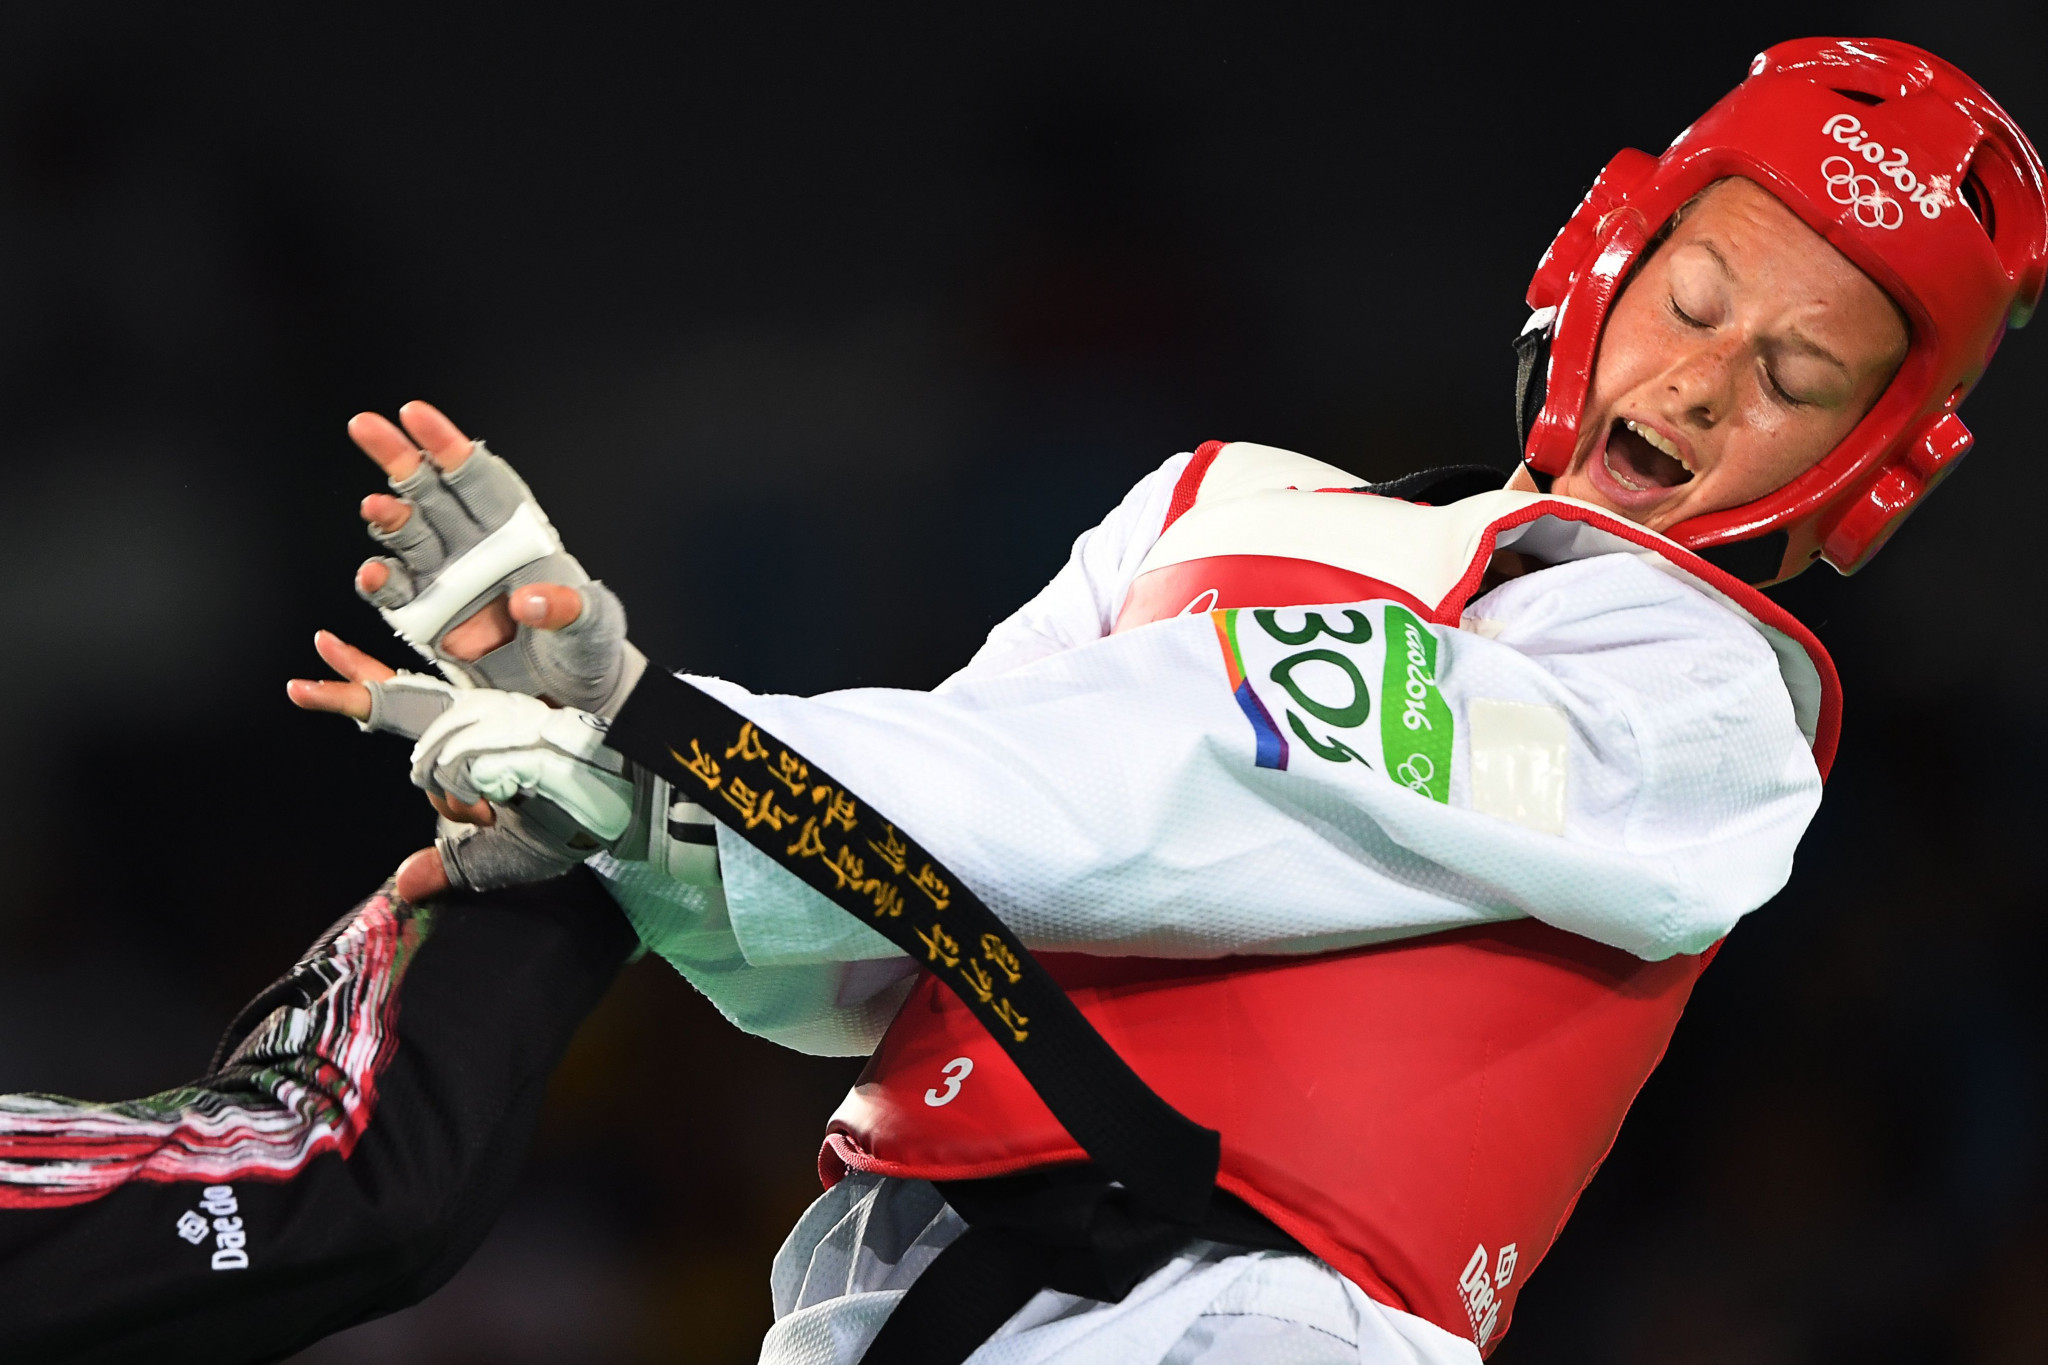 Statistics show taekwondo is third fastest-growing sport in Sweden